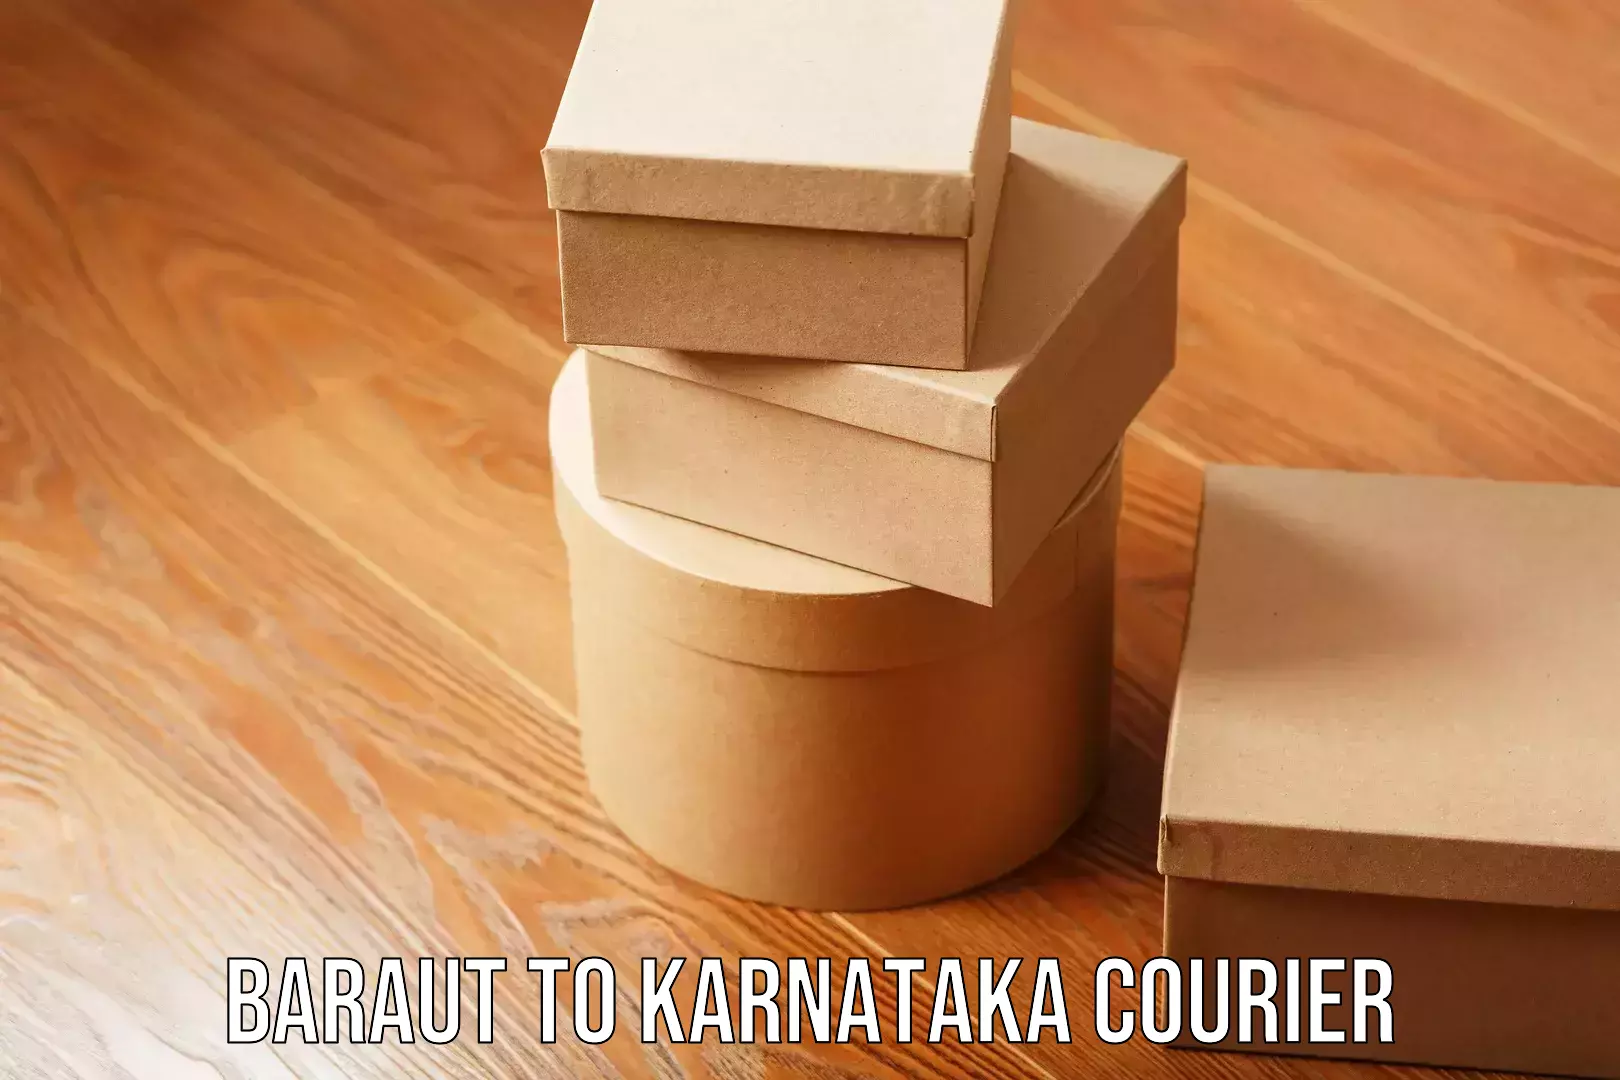 Flexible delivery schedules Baraut to Karnataka